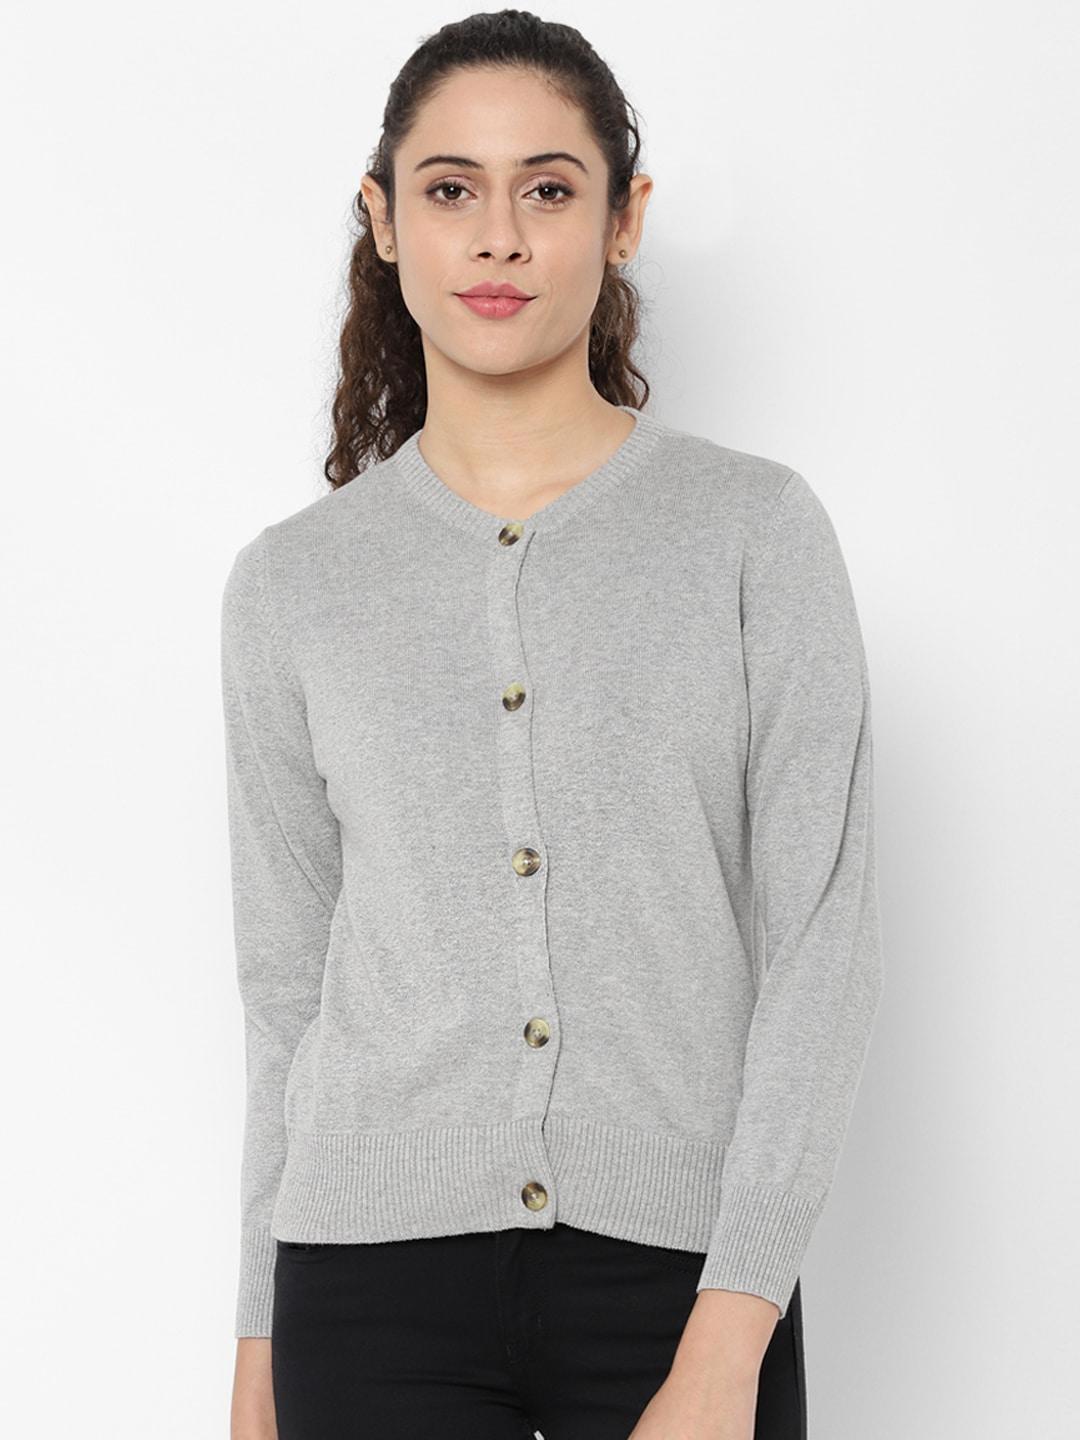 allen-solly-women-grey-solid-cardigan-sweater